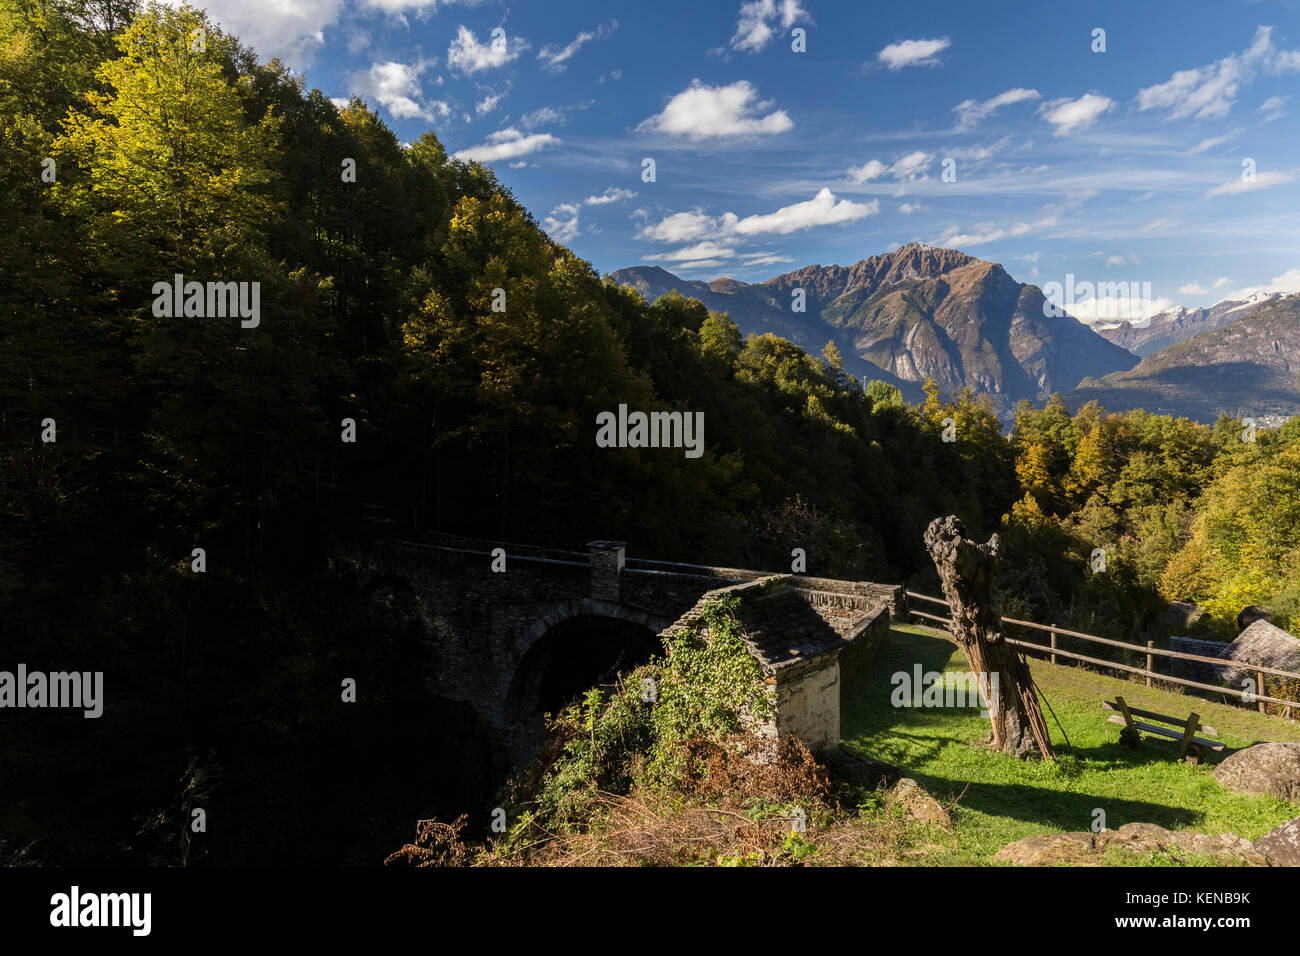 The old mills of Verigo in autumn, Trontano, Parco Nazionale della Val Grande, Val d'Ossola, Piedmont, Italy. Stock Photo